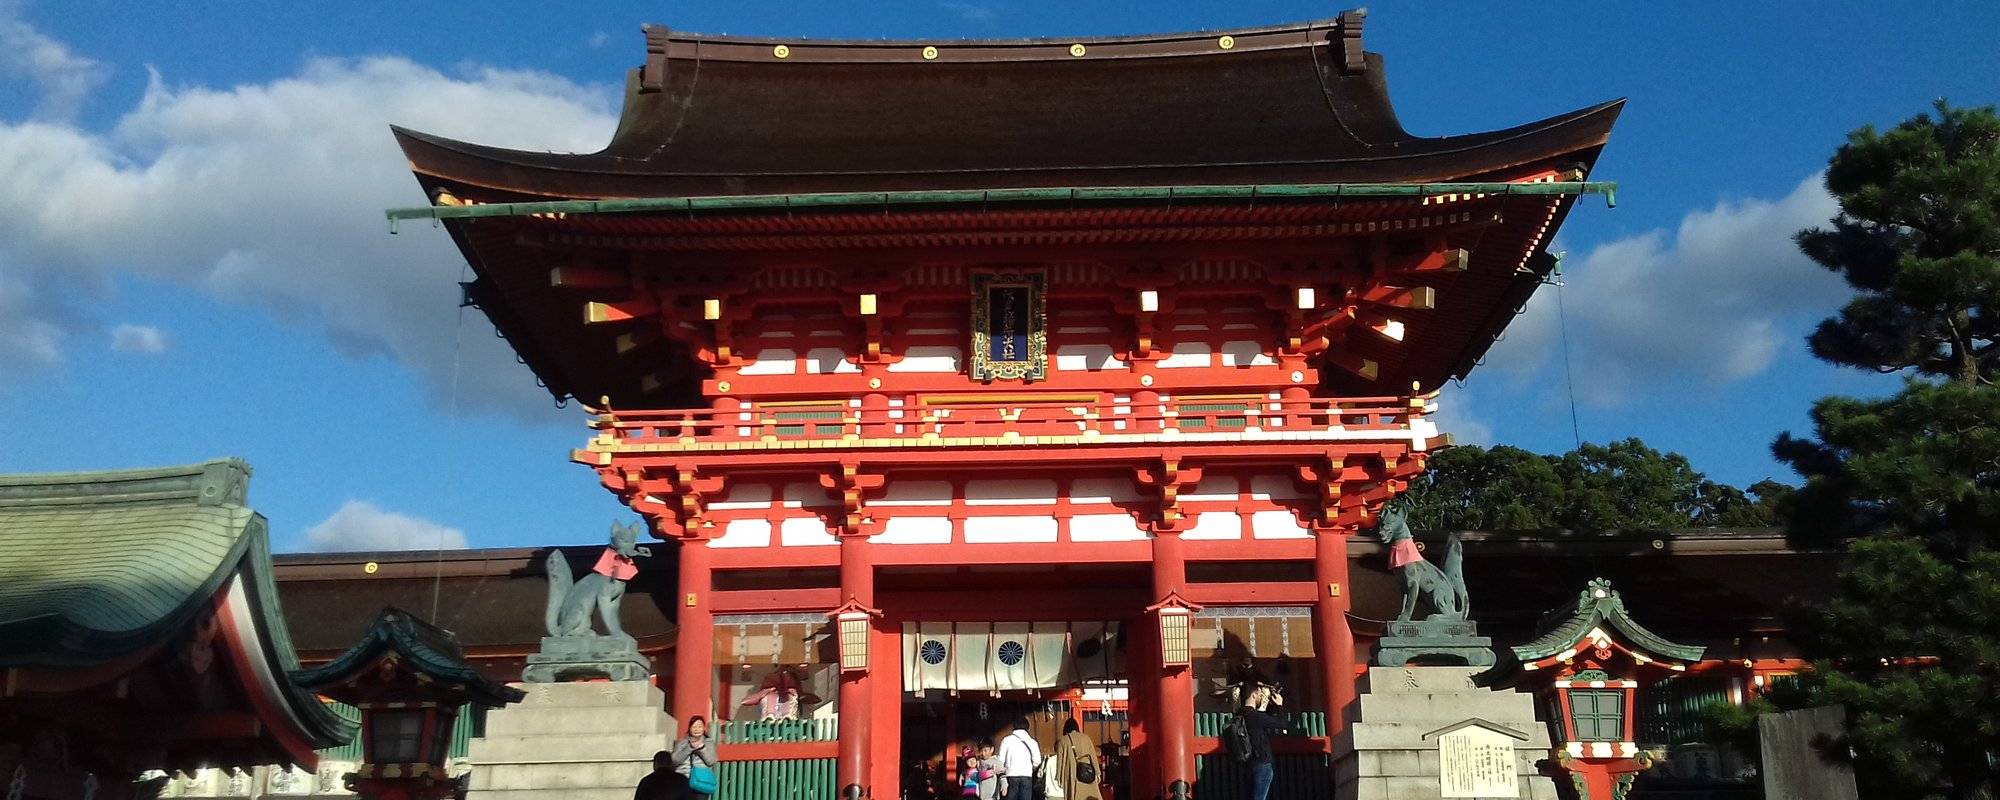 Fushimi Inari Shrine (holy foxes and thousands of orange Tori gates) ⛩️ ⛩️ ⛩️ ⛩️ ⛩️ ⛩️